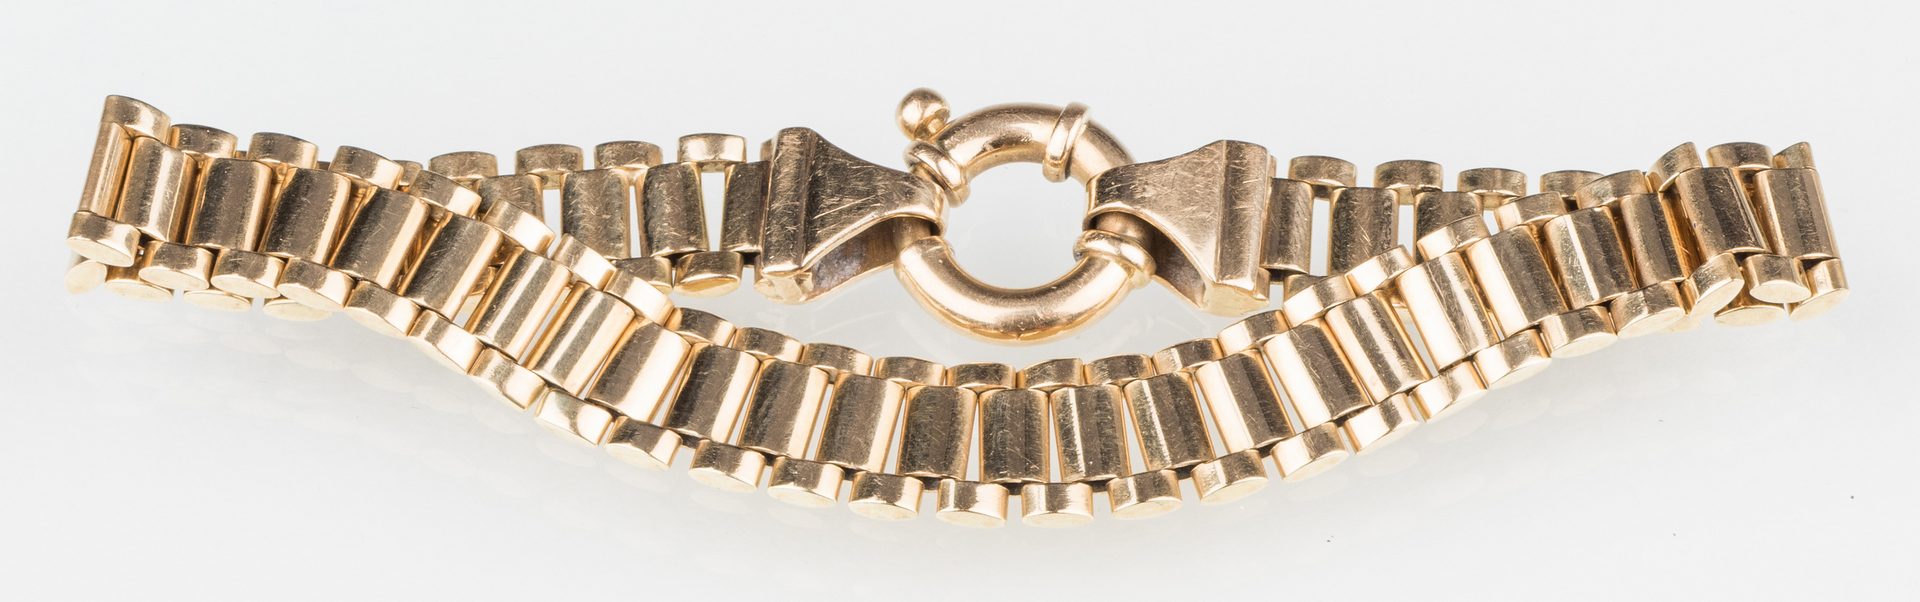 Lot 249: 18K Bracelet with Ring Clasp, 35 g.